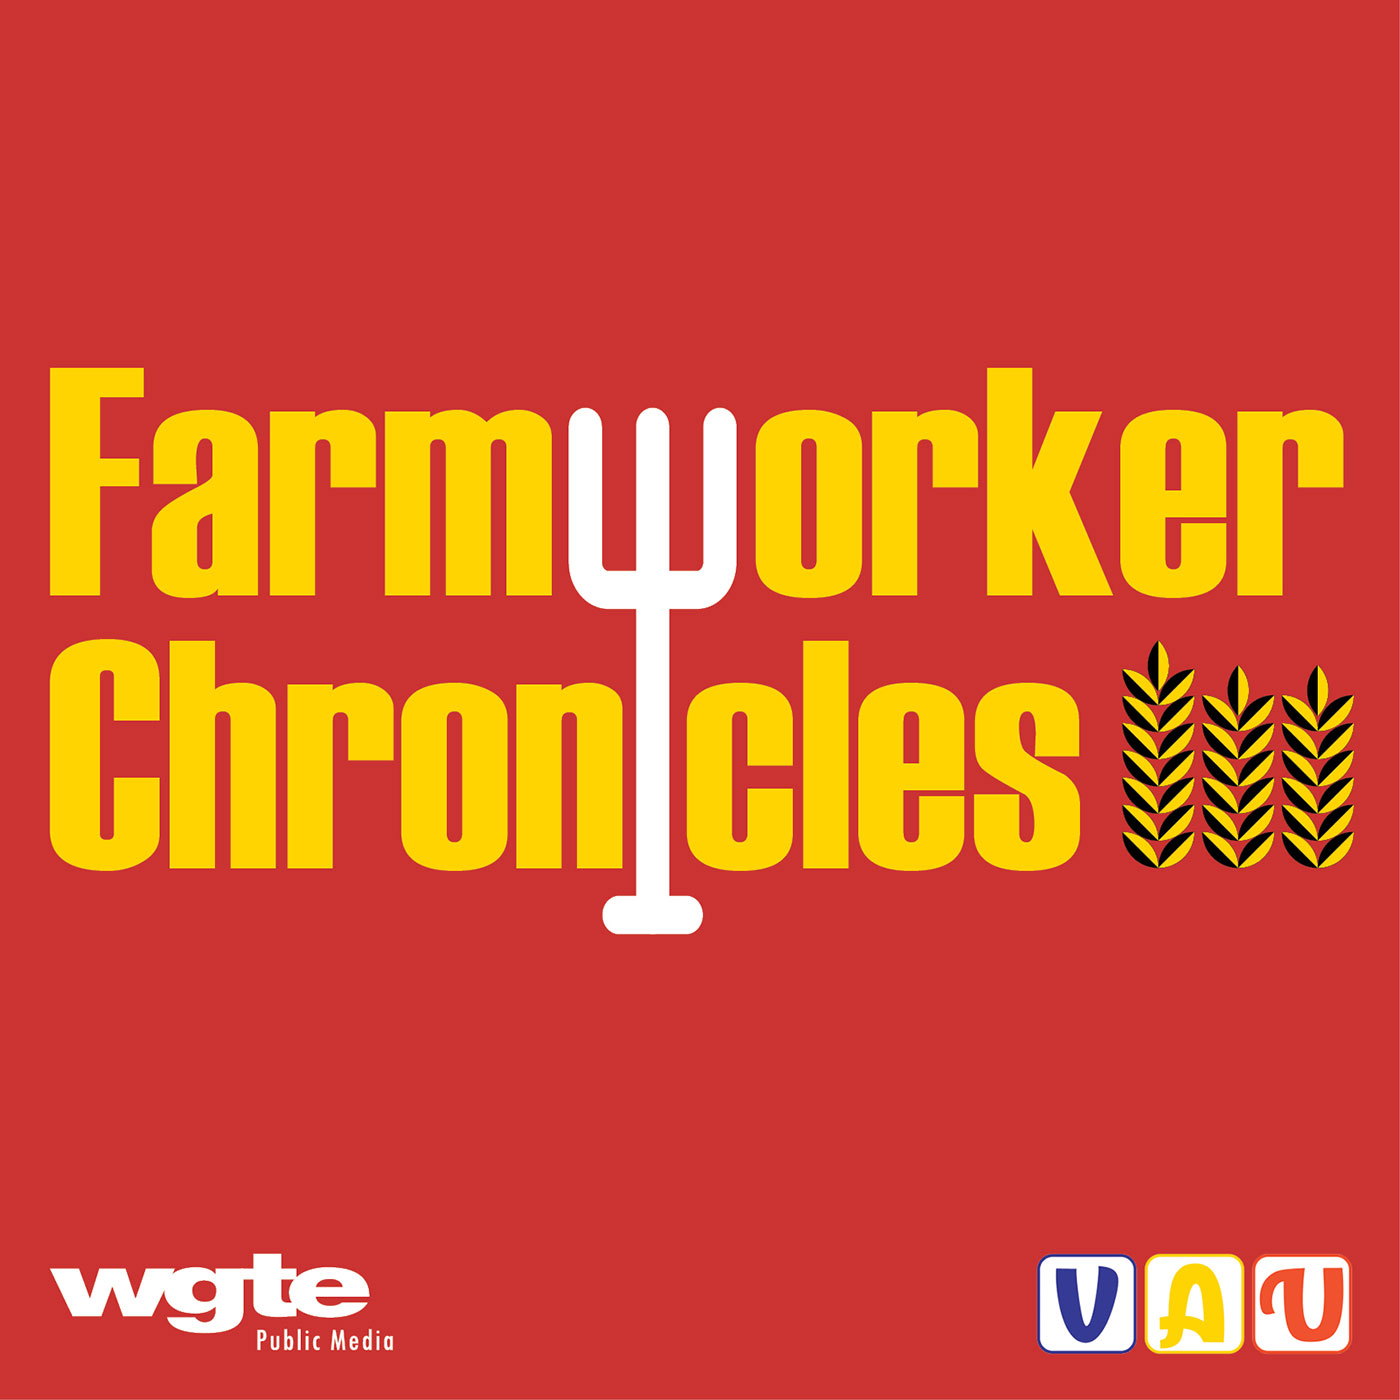 farmworker chronicles 